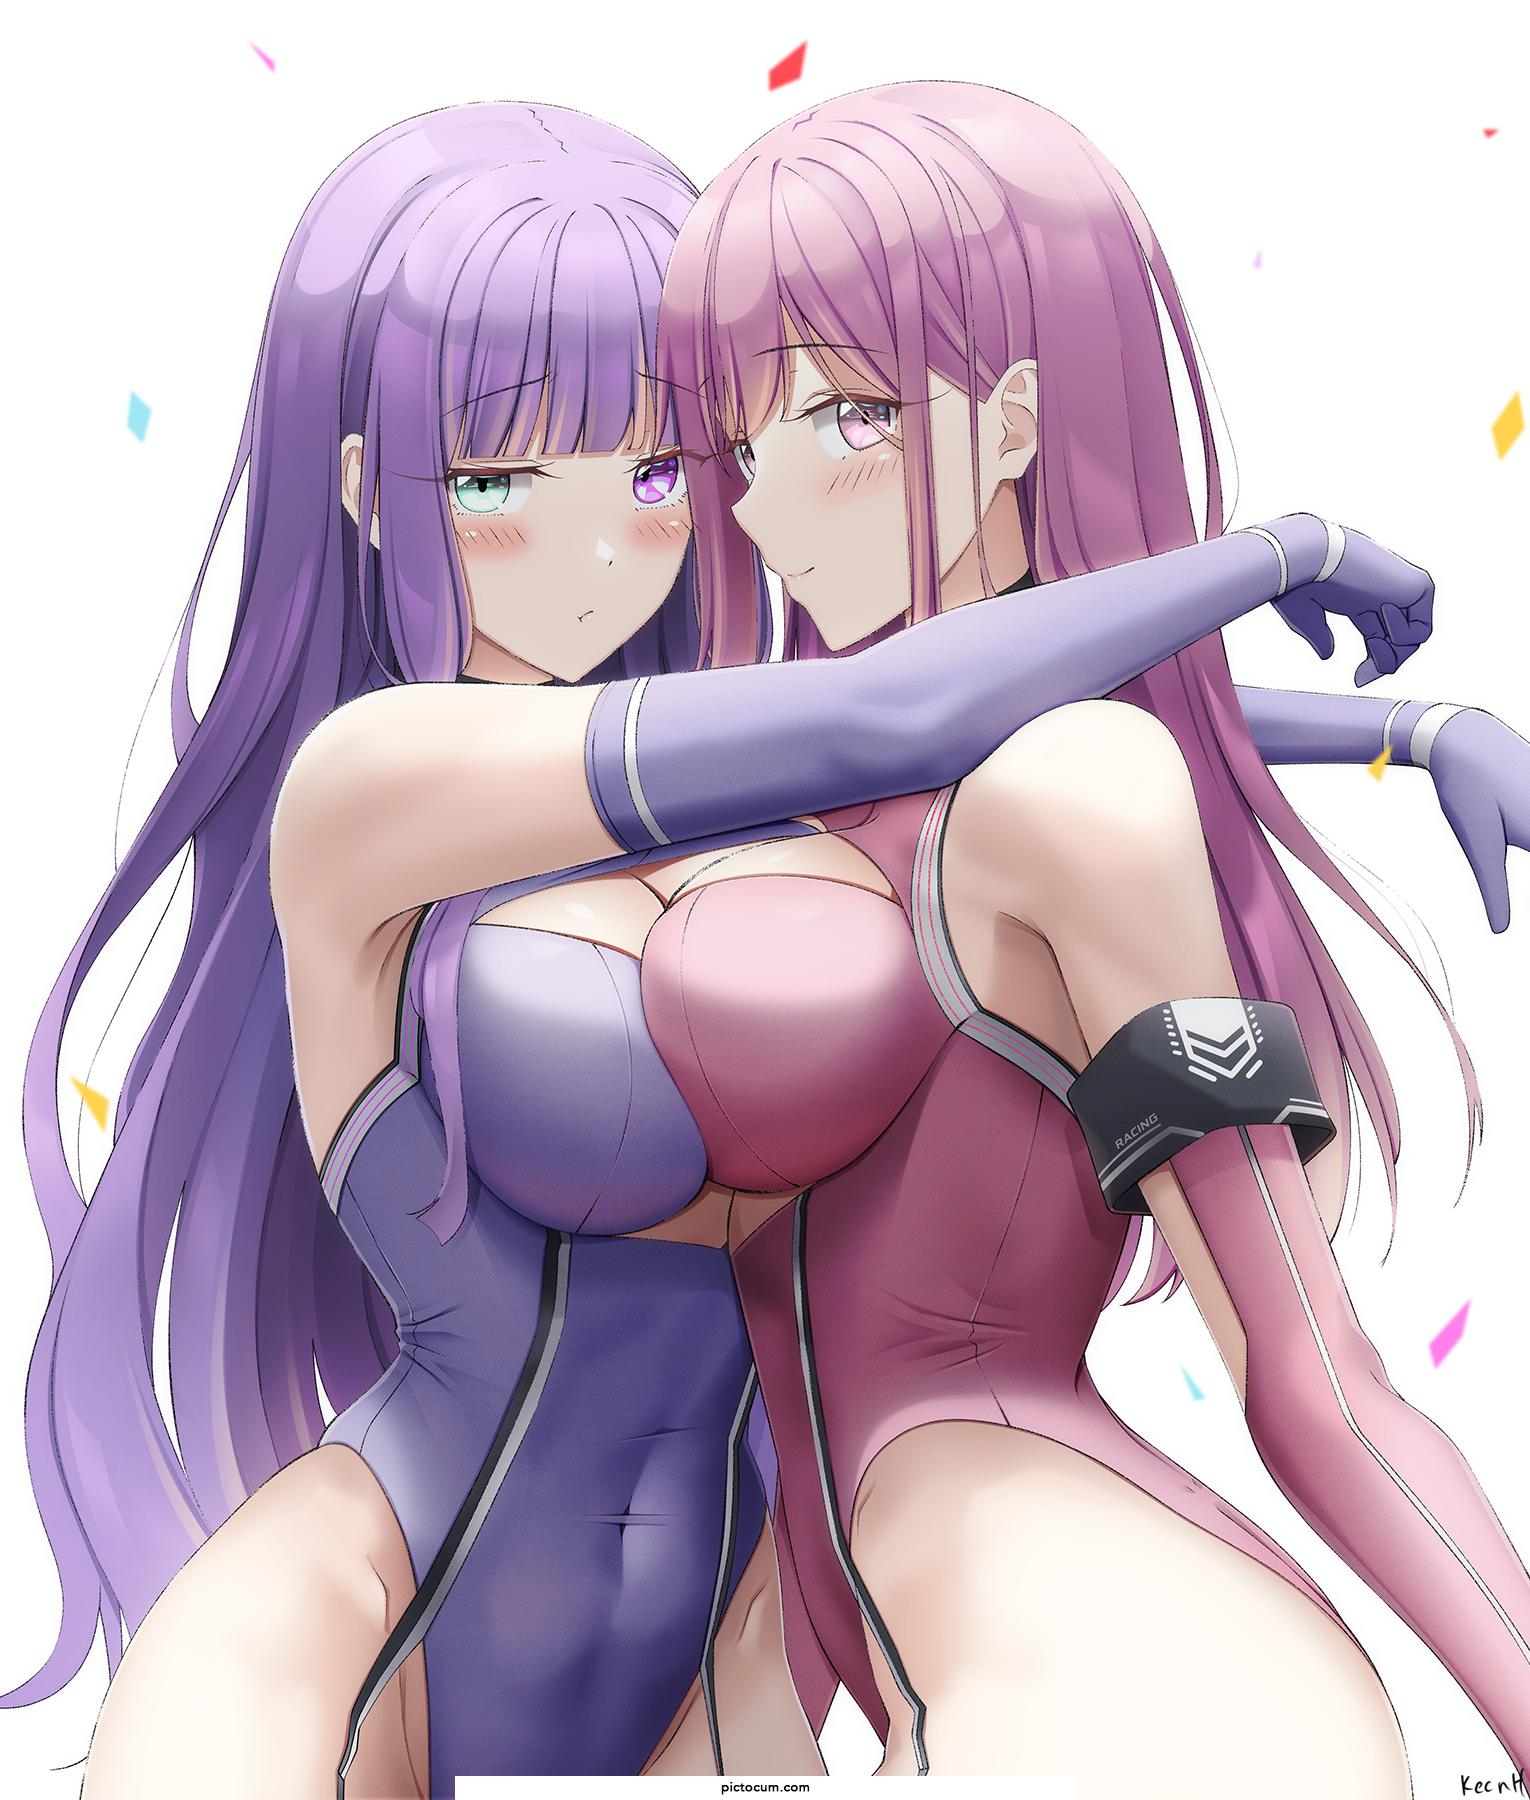 Yuri is good